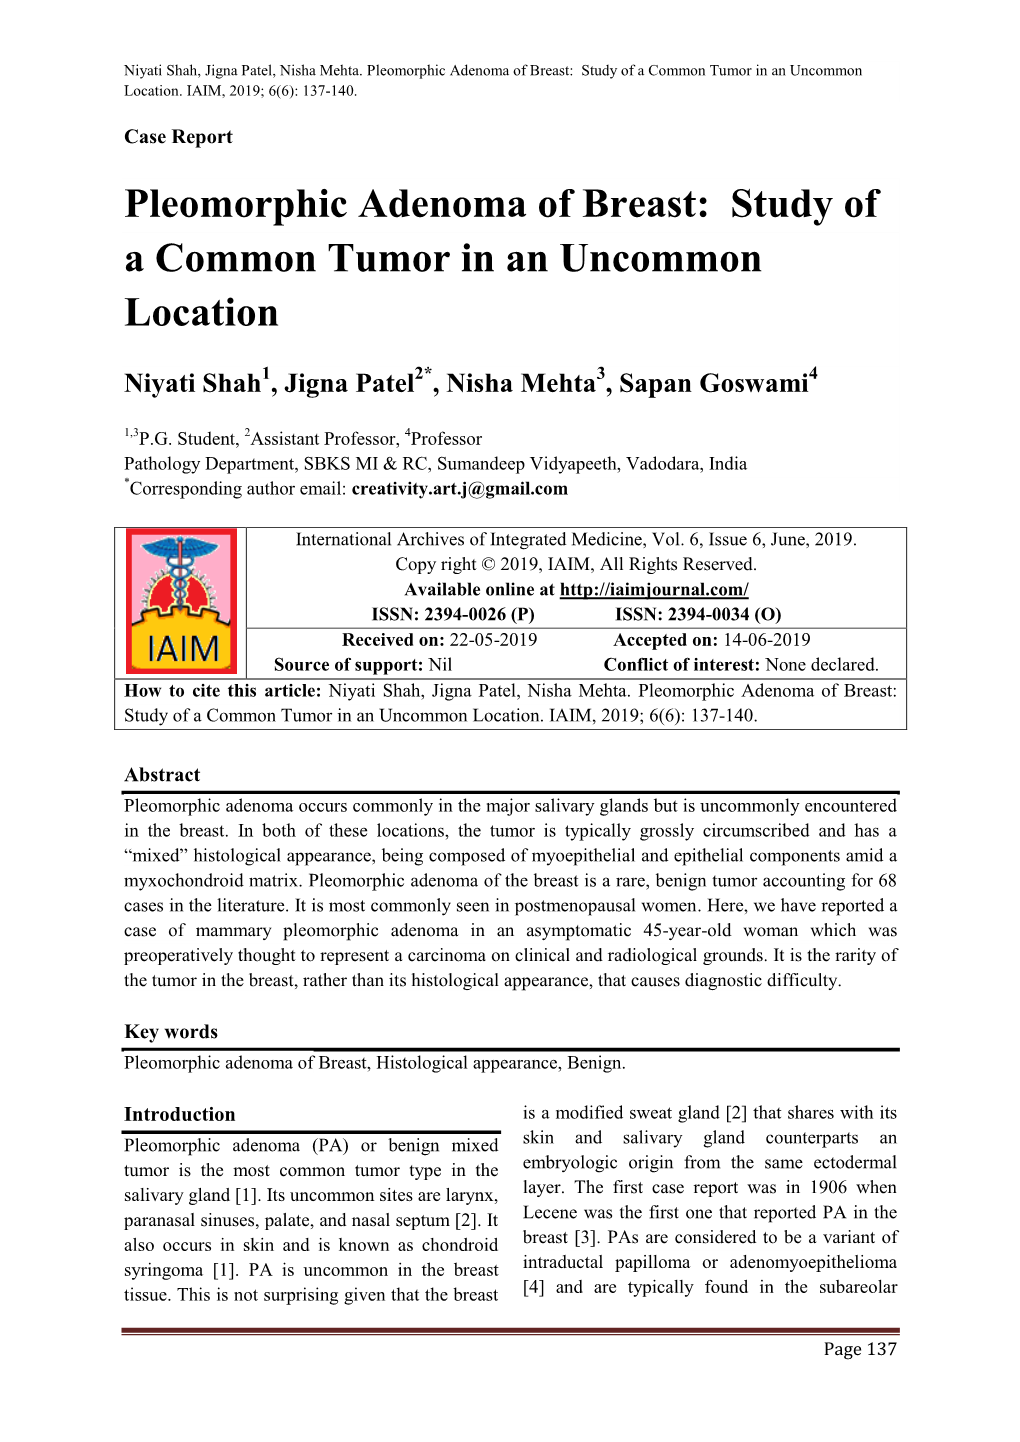 Pleomorphic Adenoma of Breast: Study of a Common Tumor in an Uncommon Location